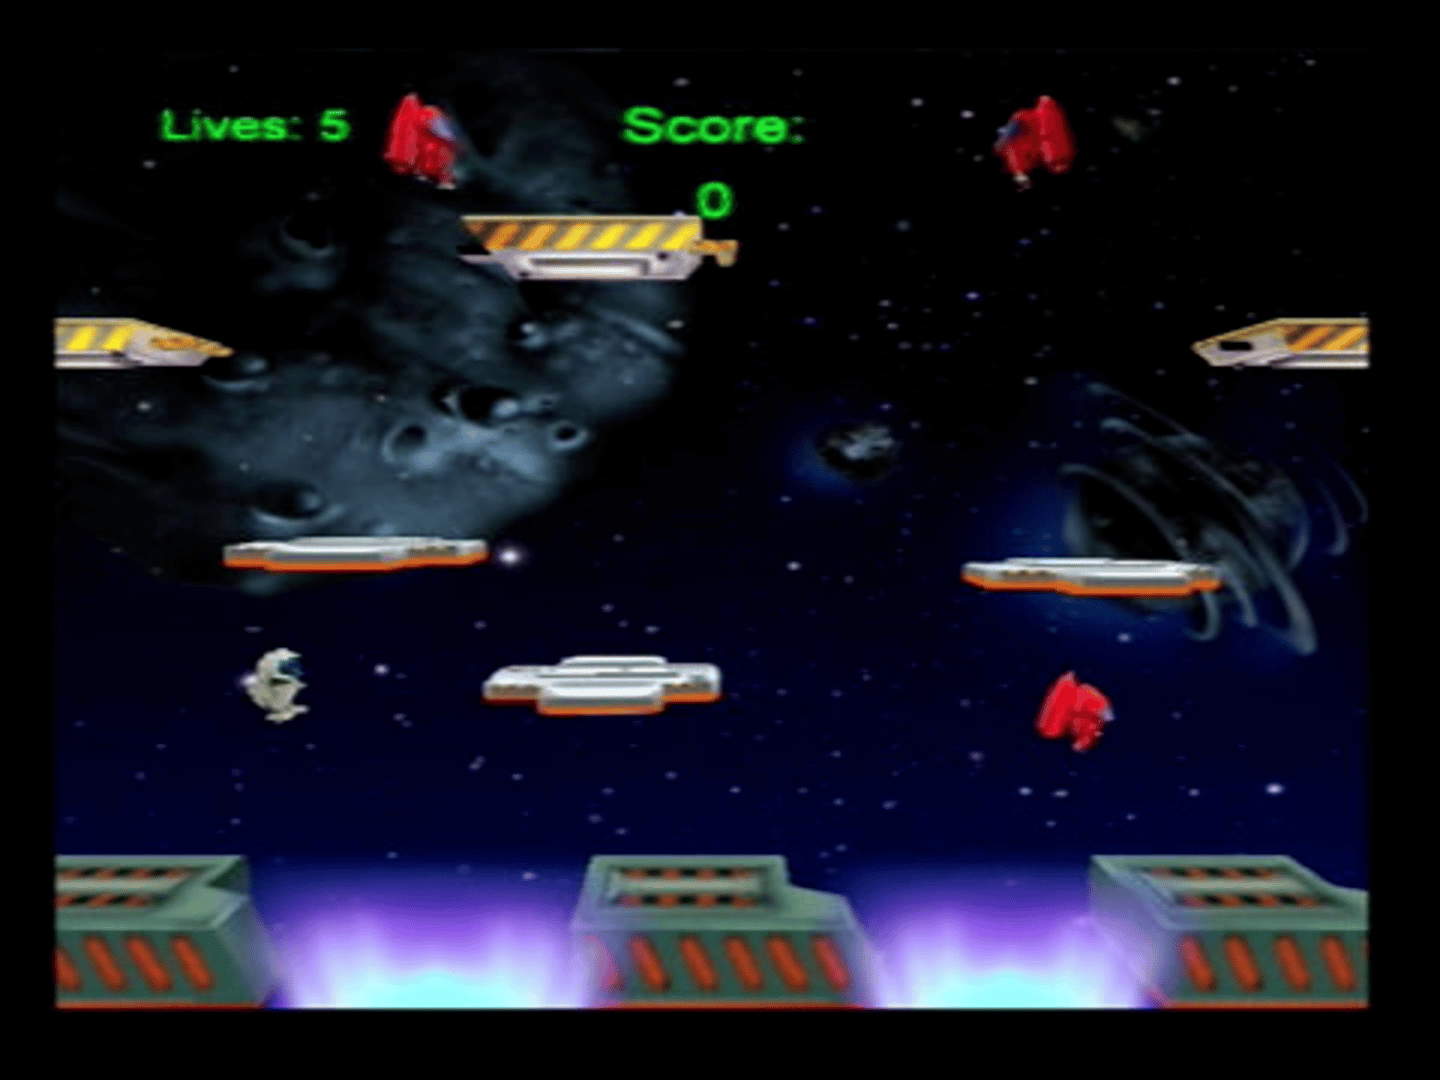 The Arcade screenshot